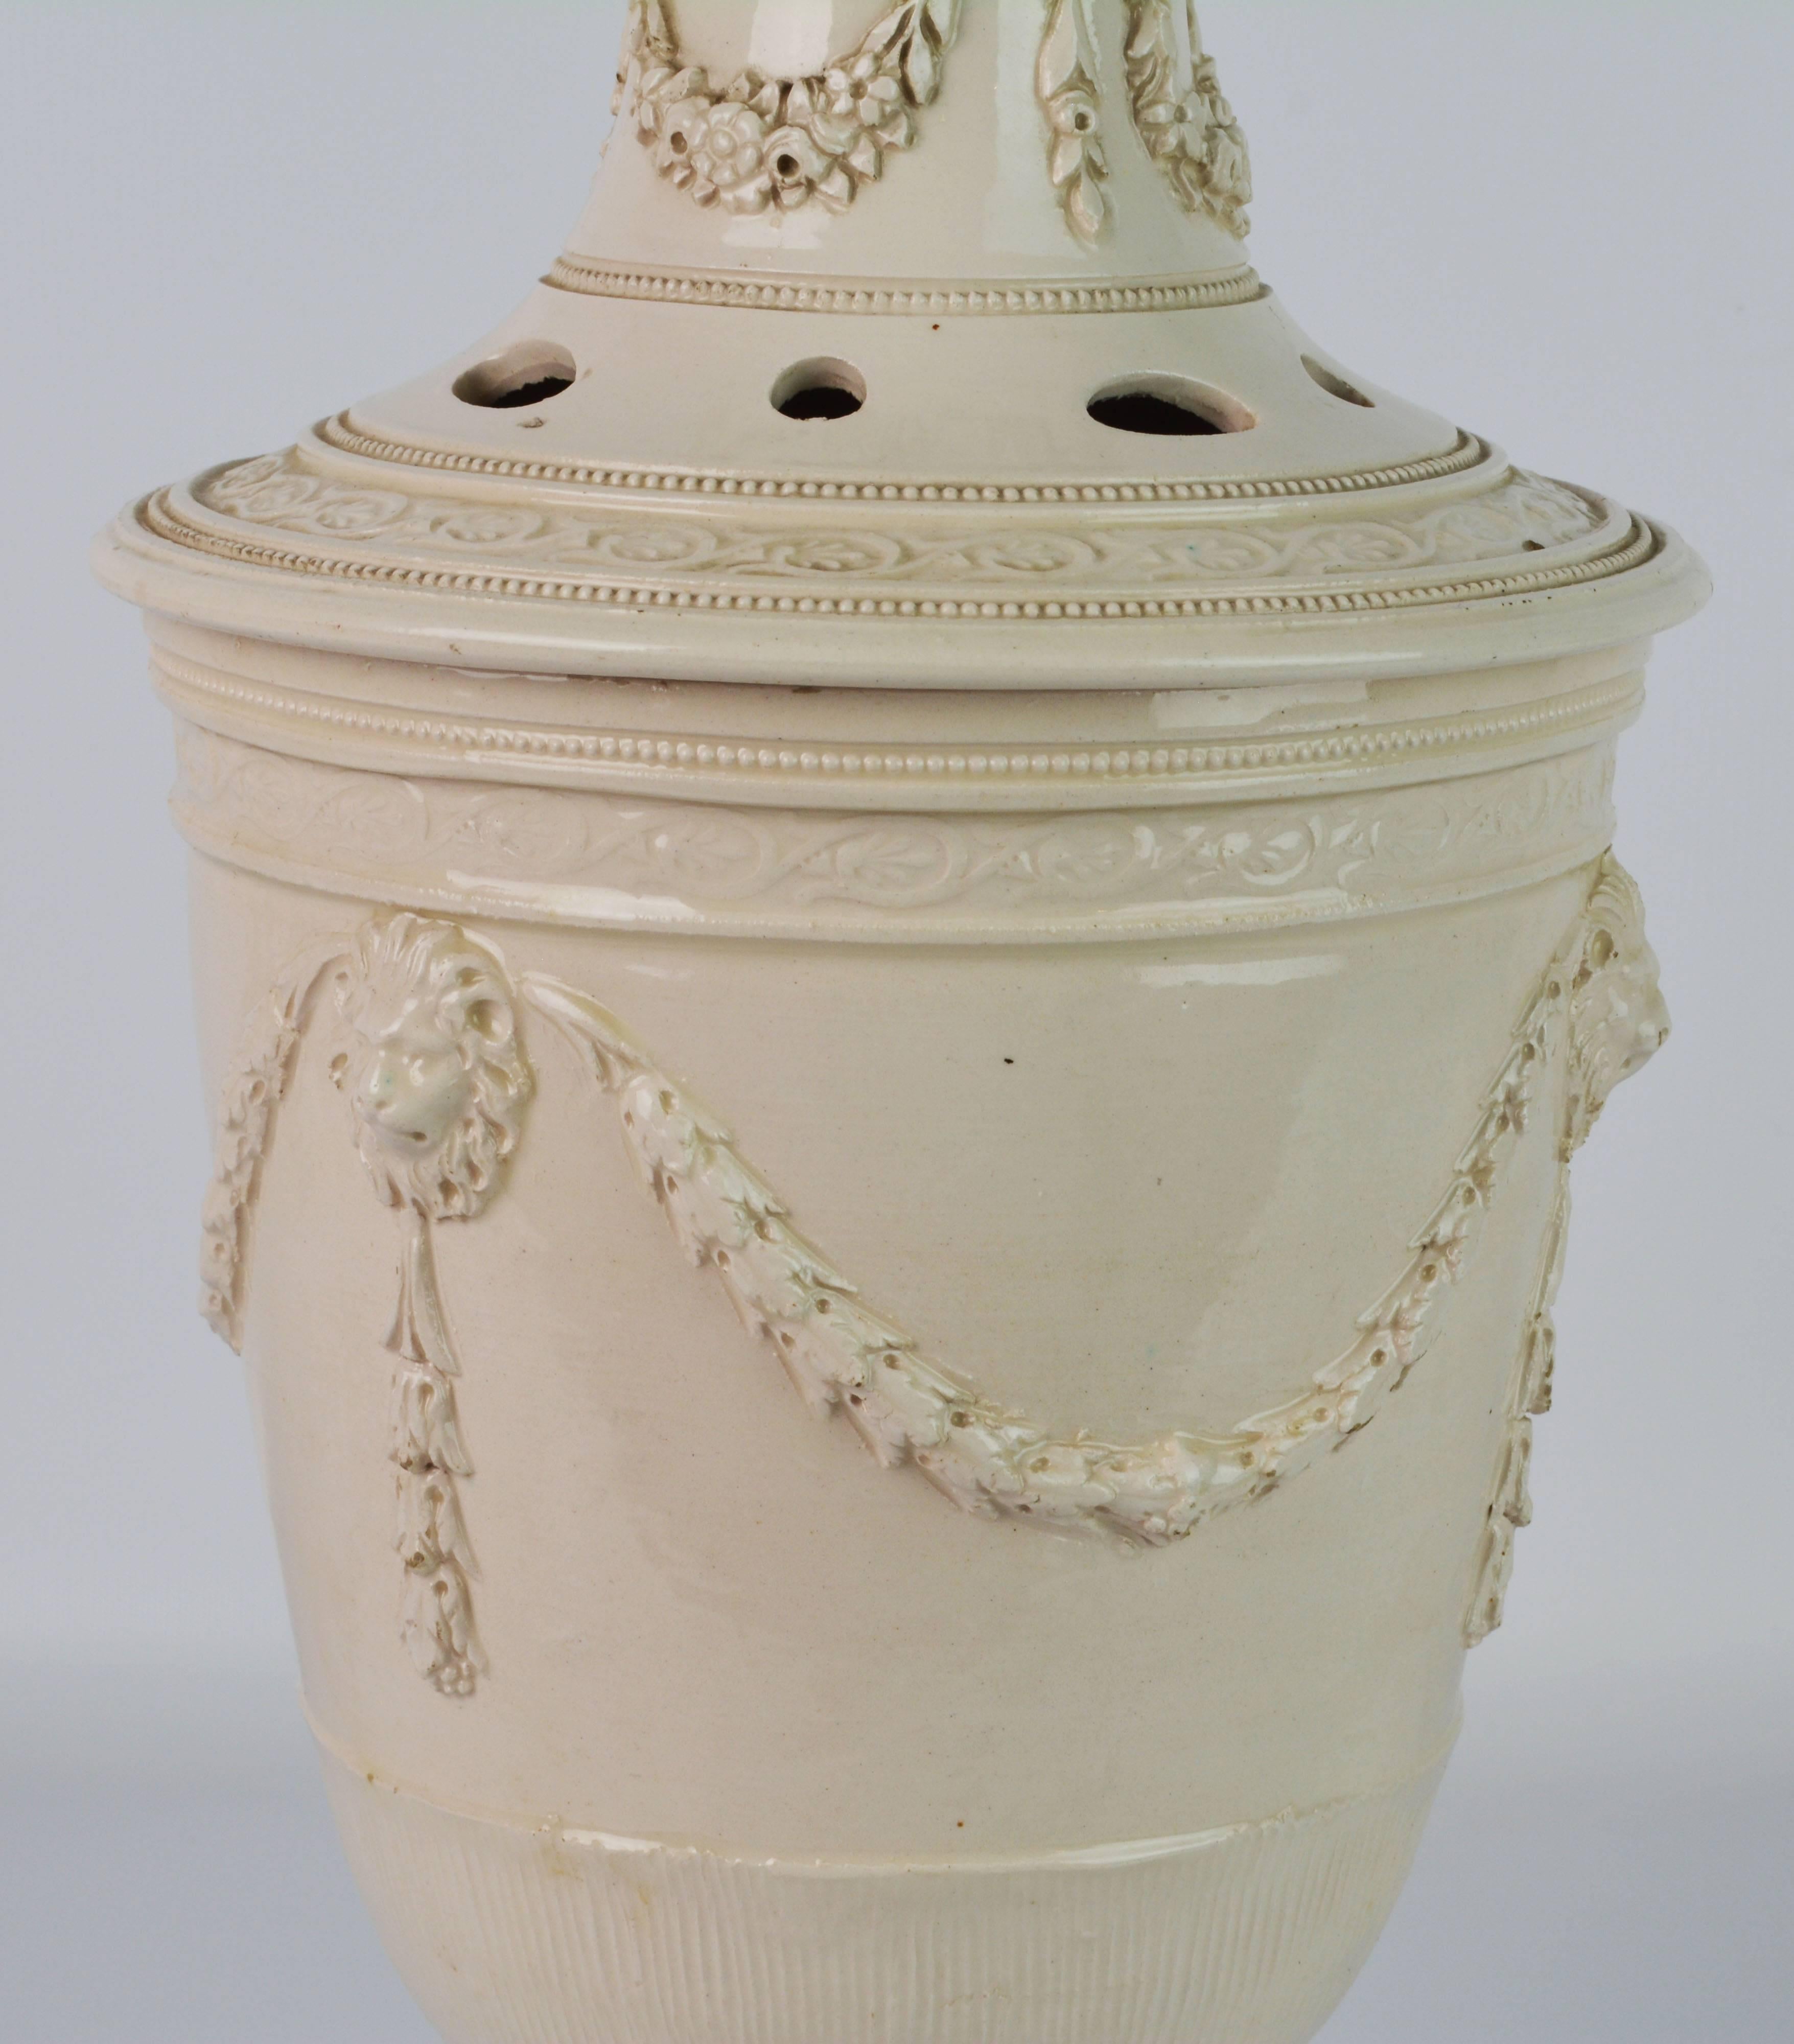 Glazed Rare 18th Century Leeds Cream Ware Covered Potpourri Jar or Urn